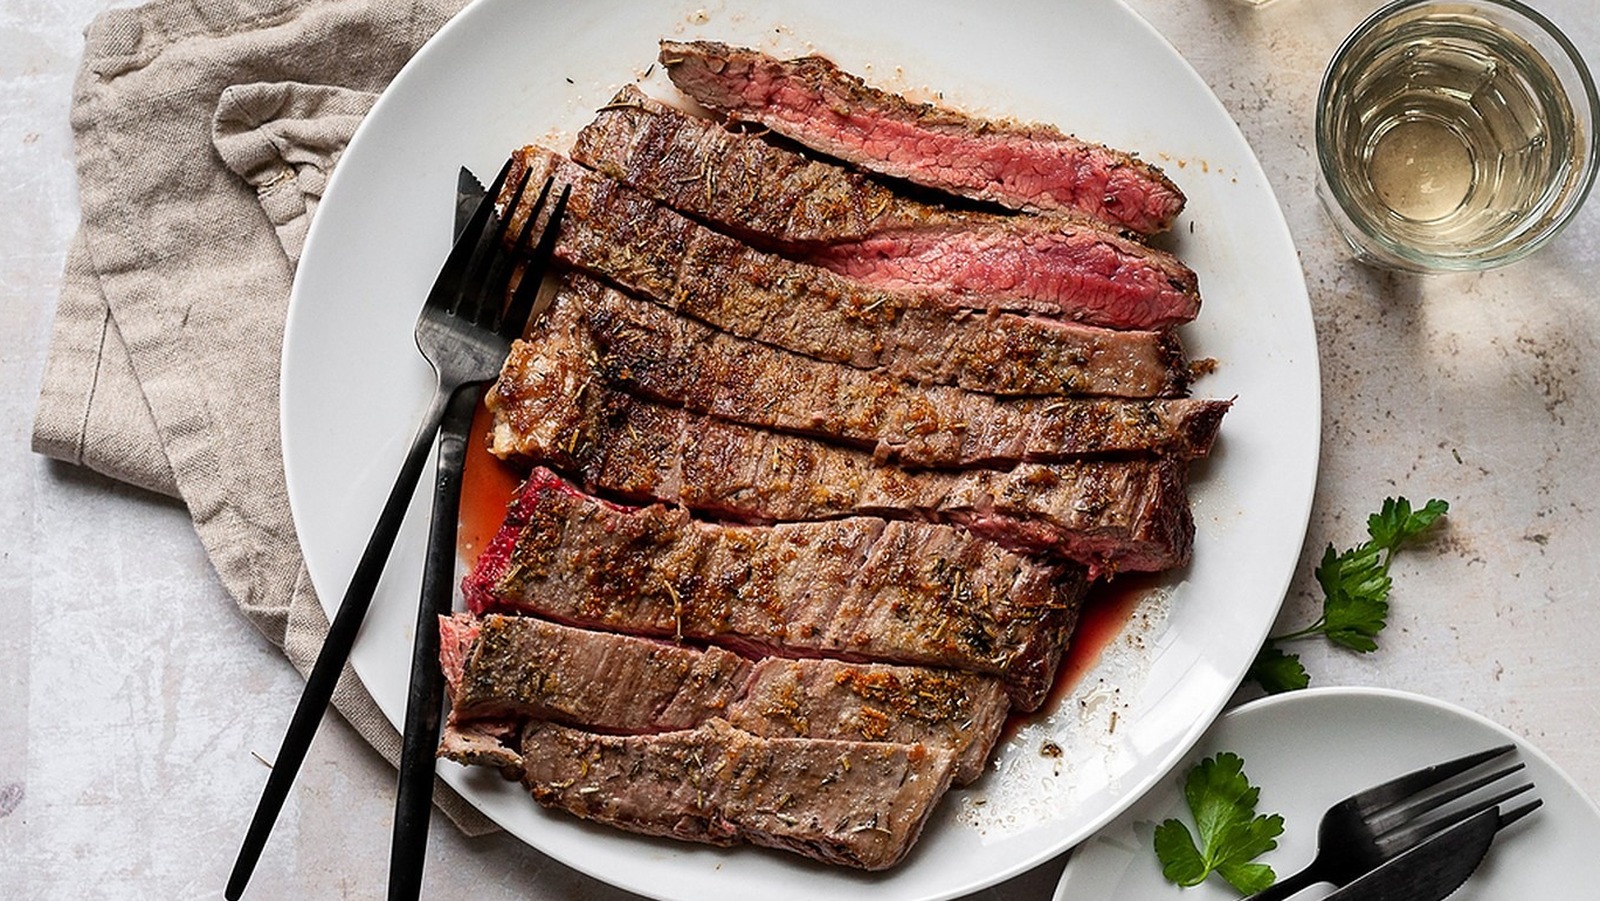 https://www.mashed.com/img/gallery/seared-flat-iron-steak-recipe/l-intro-1652106139.jpg